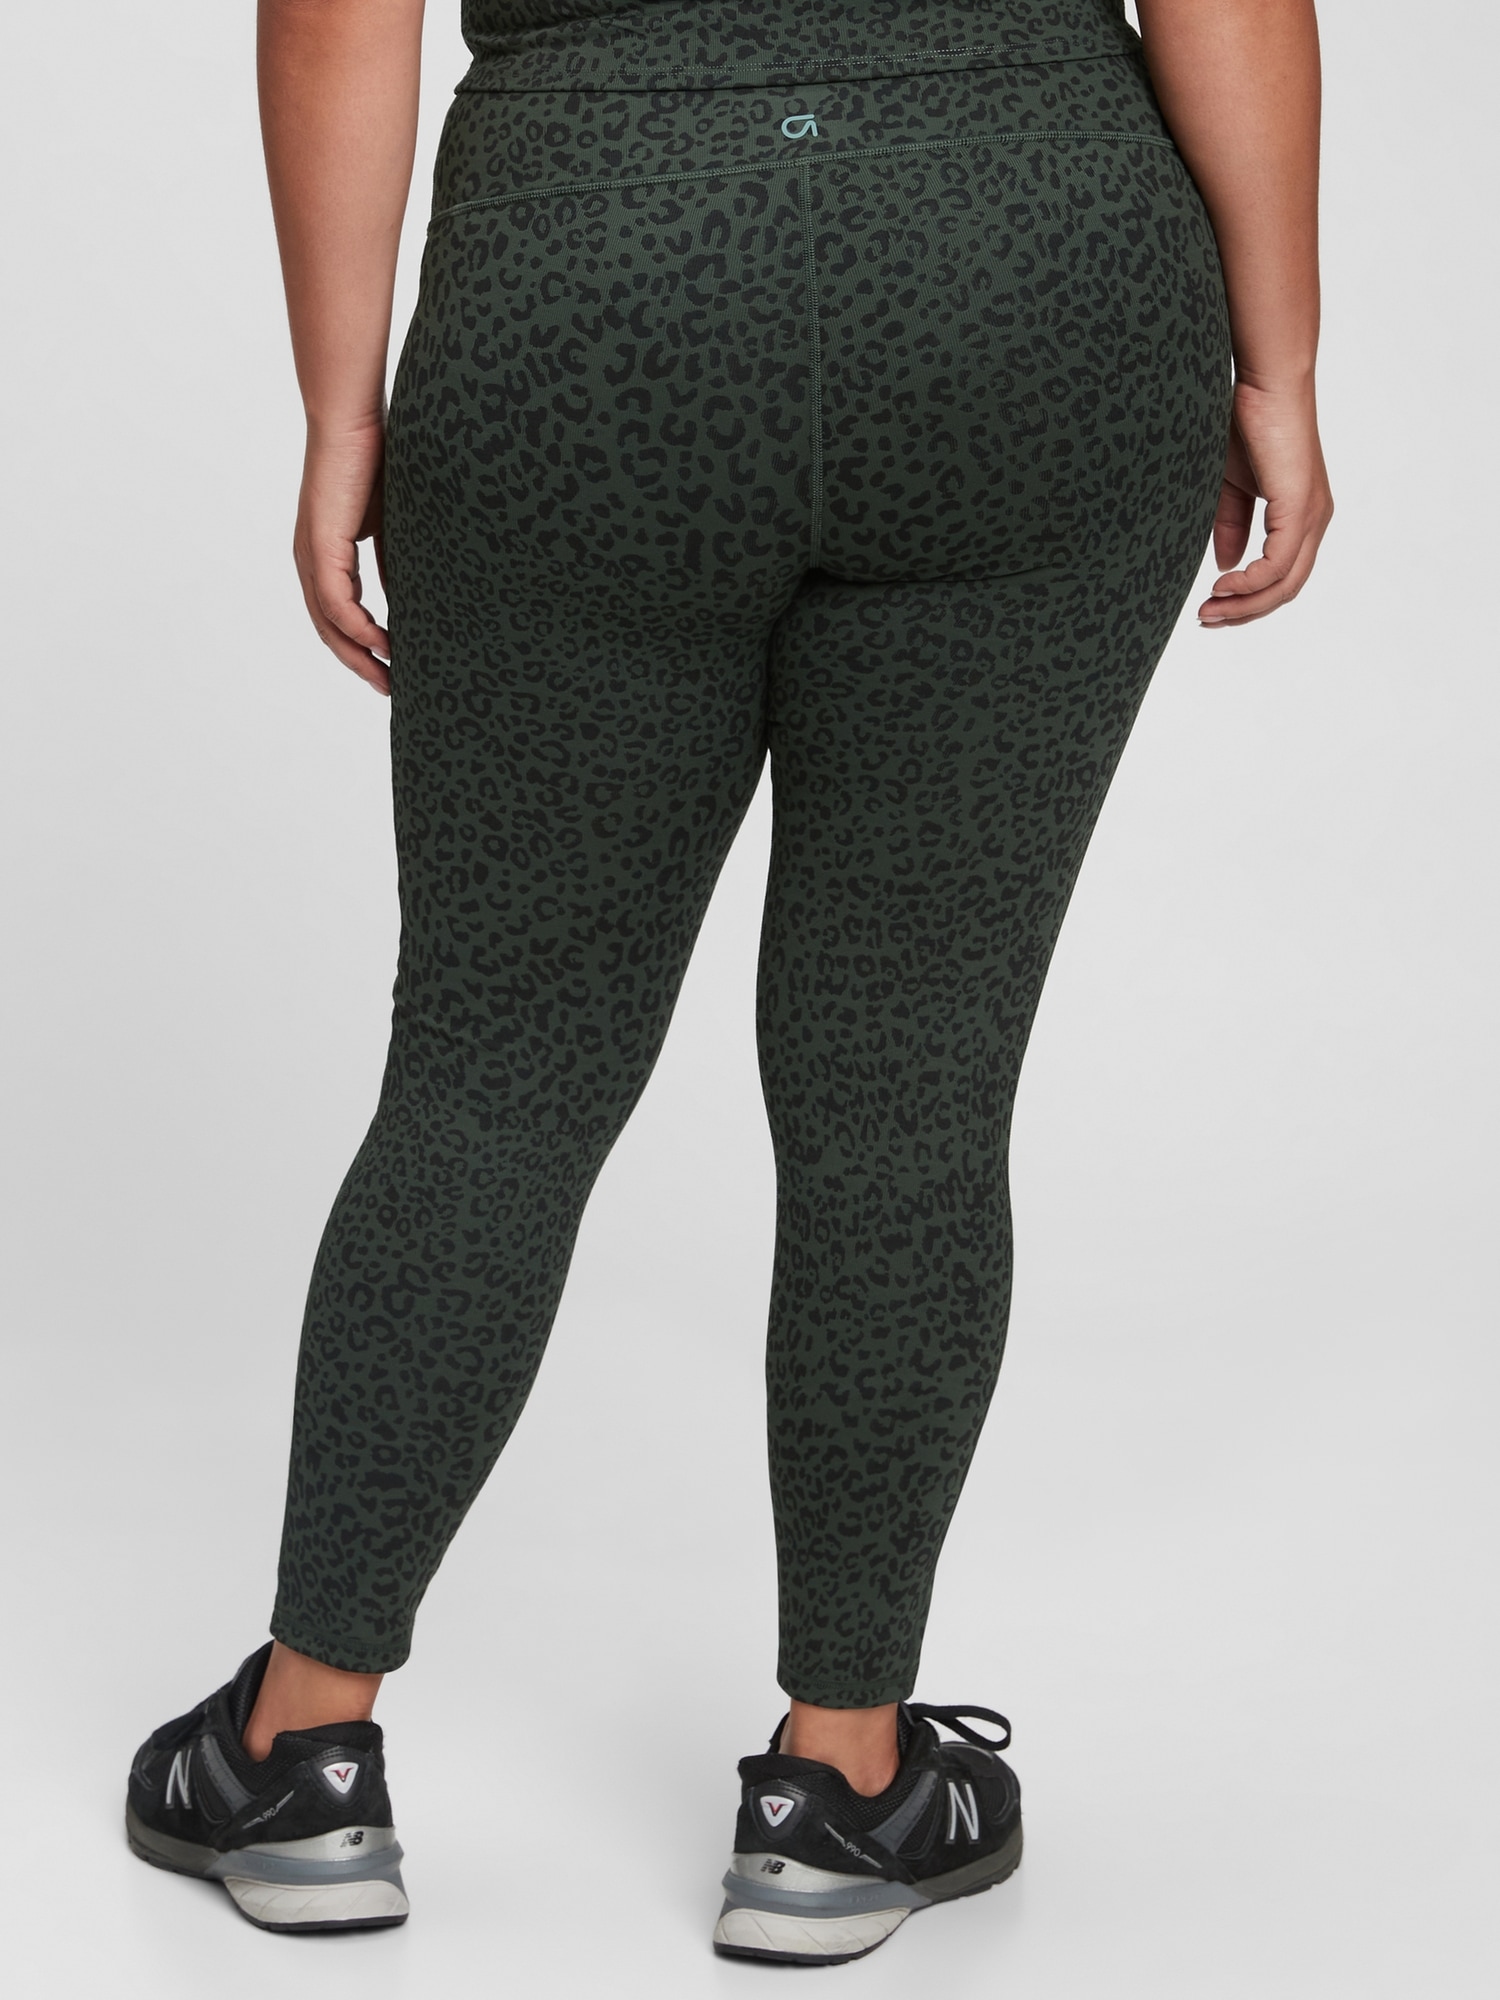 Gap Fit Leggings Size XS #workout #leggings #pants - Depop